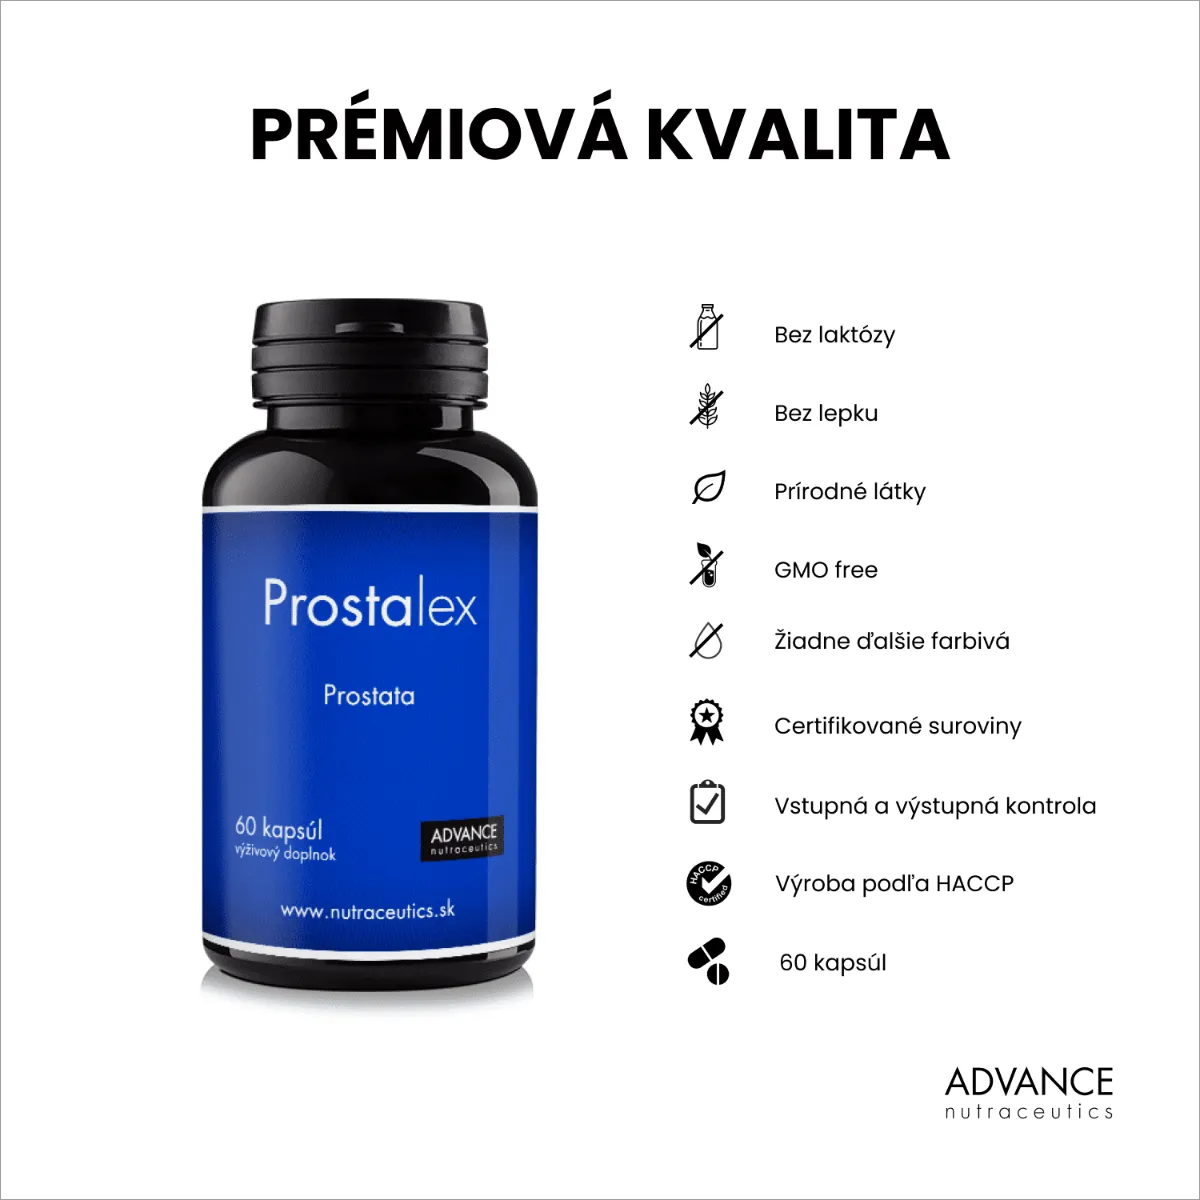 Prostalex 60 cps. – prostata cps 1x60 ks